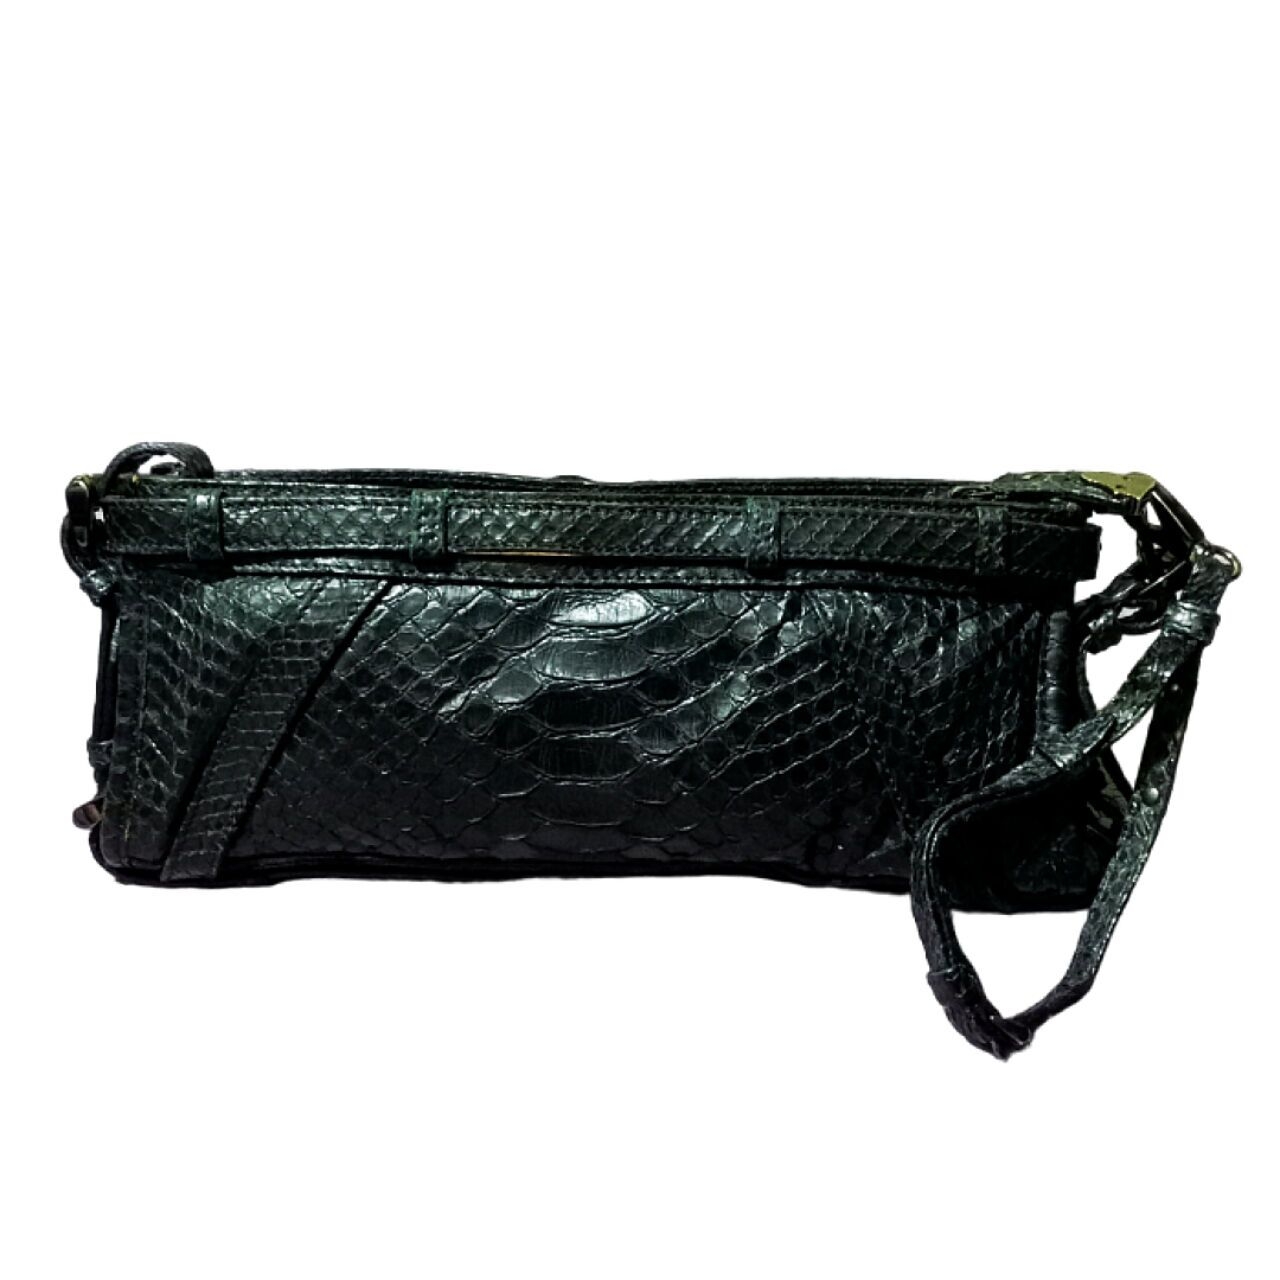 Burberry Prorsum Black Reptile Clutch - Wristlet Bag